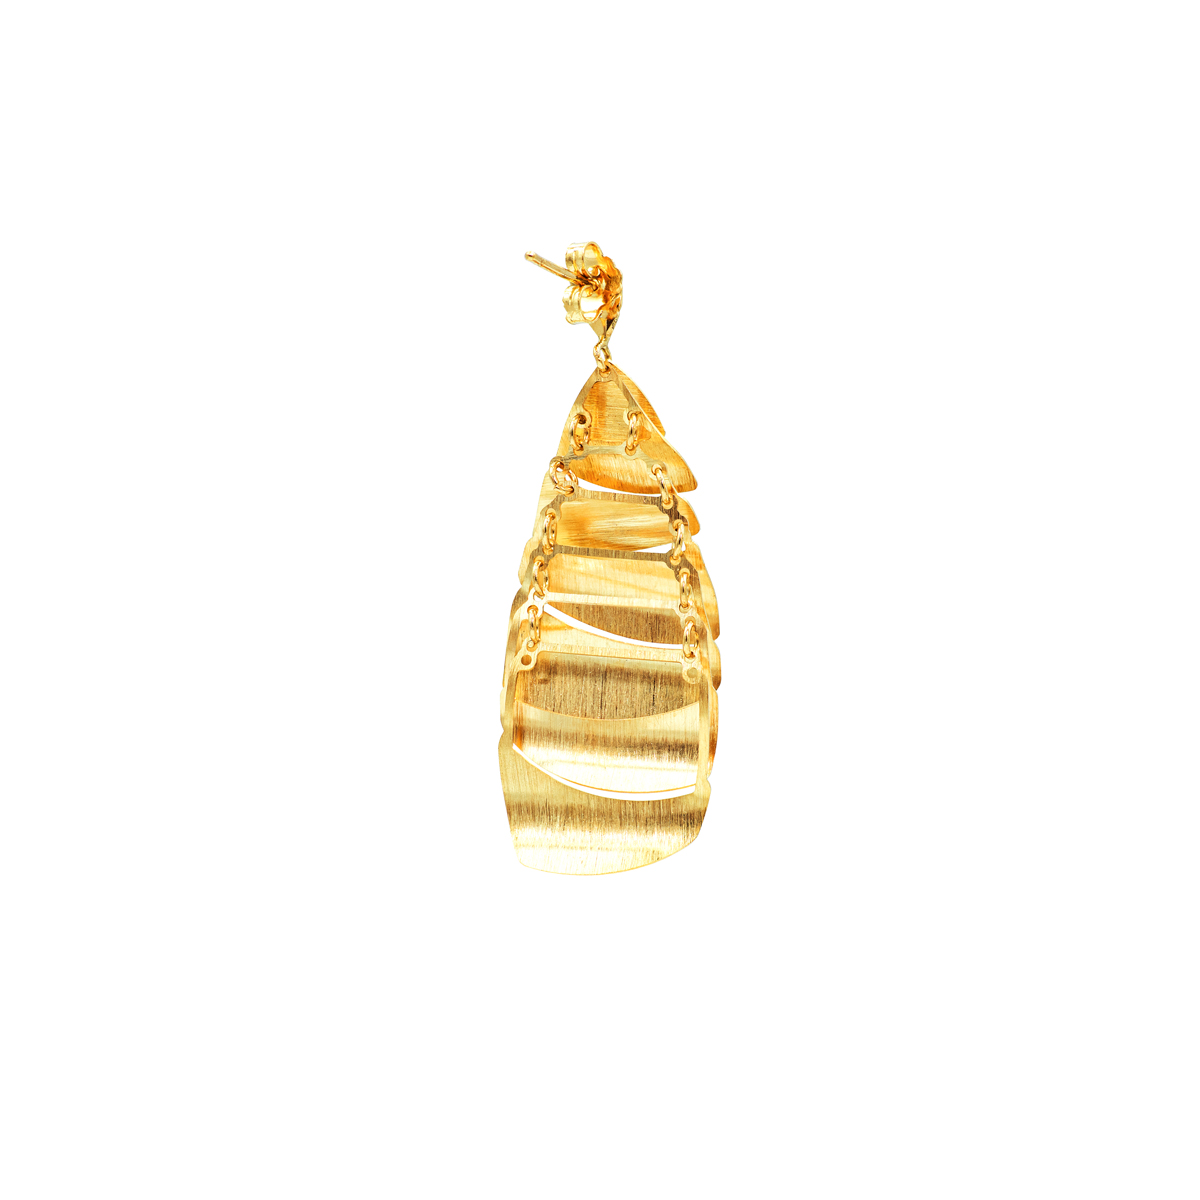 Shade Plate Dangle Earrings in 14k Yellow Gold